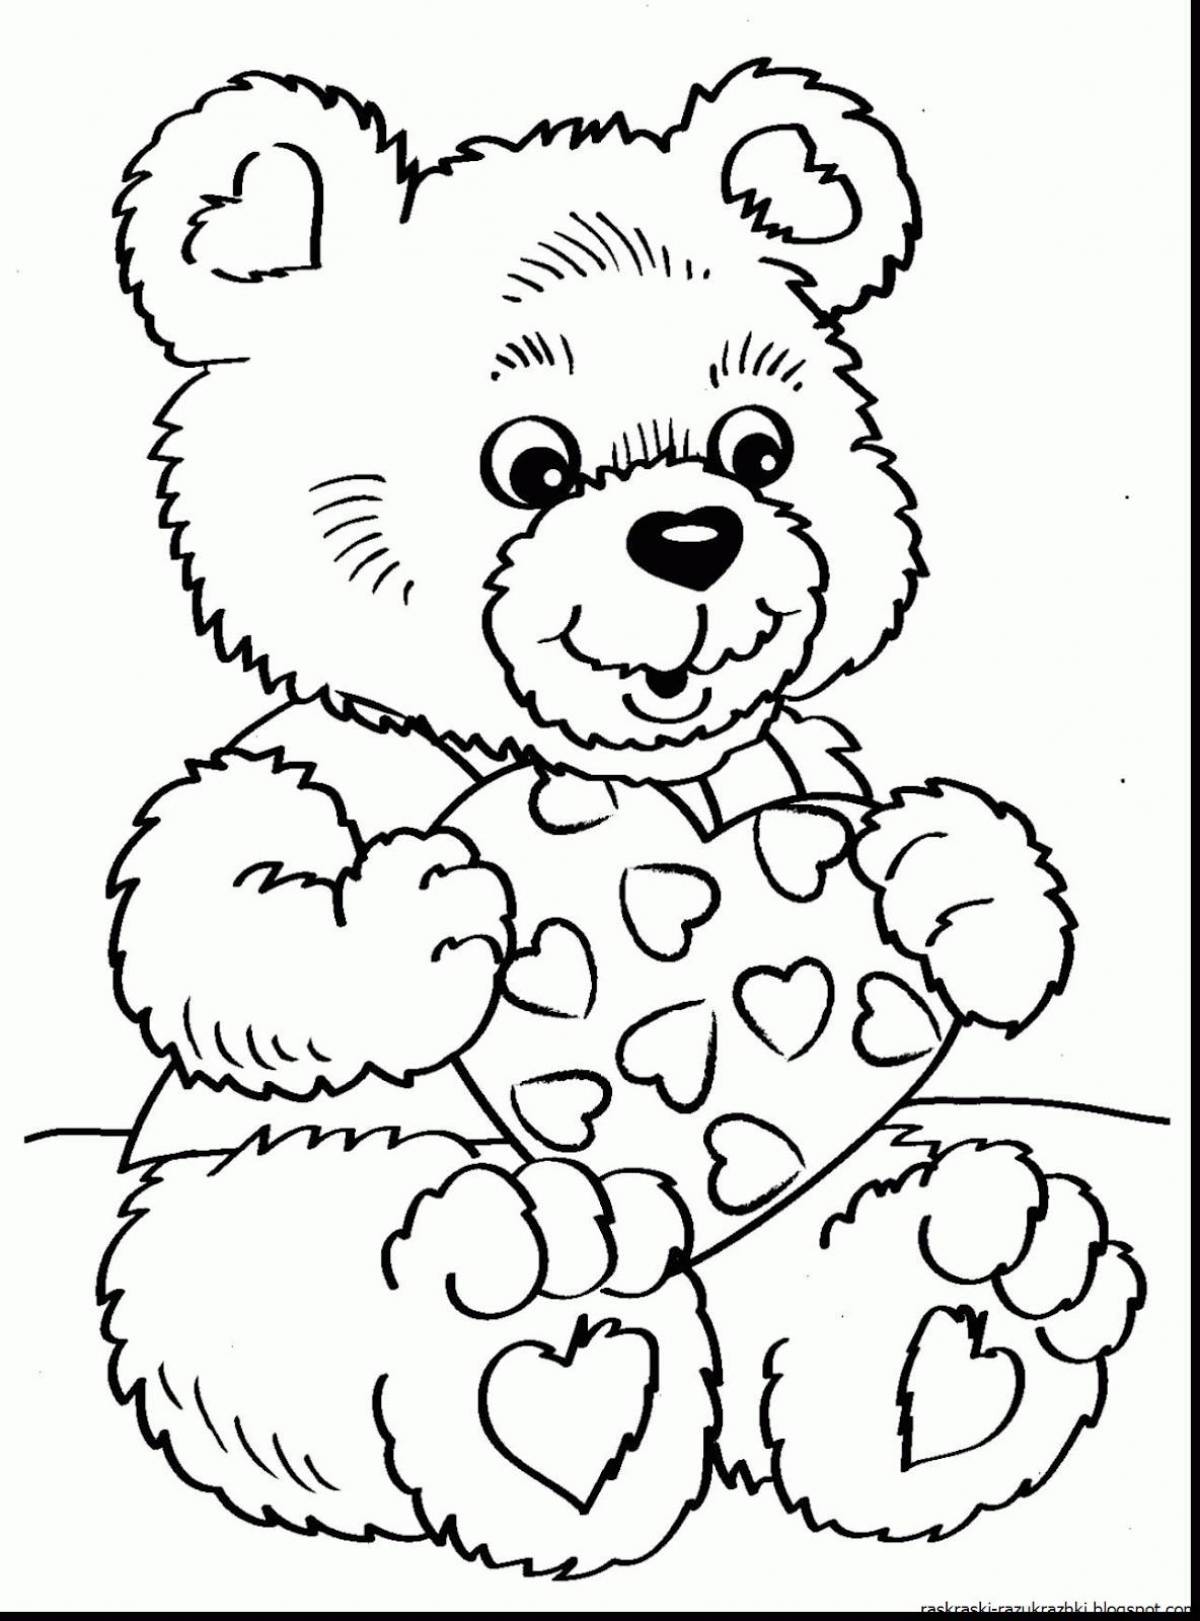 Colouring friendly teddy bear